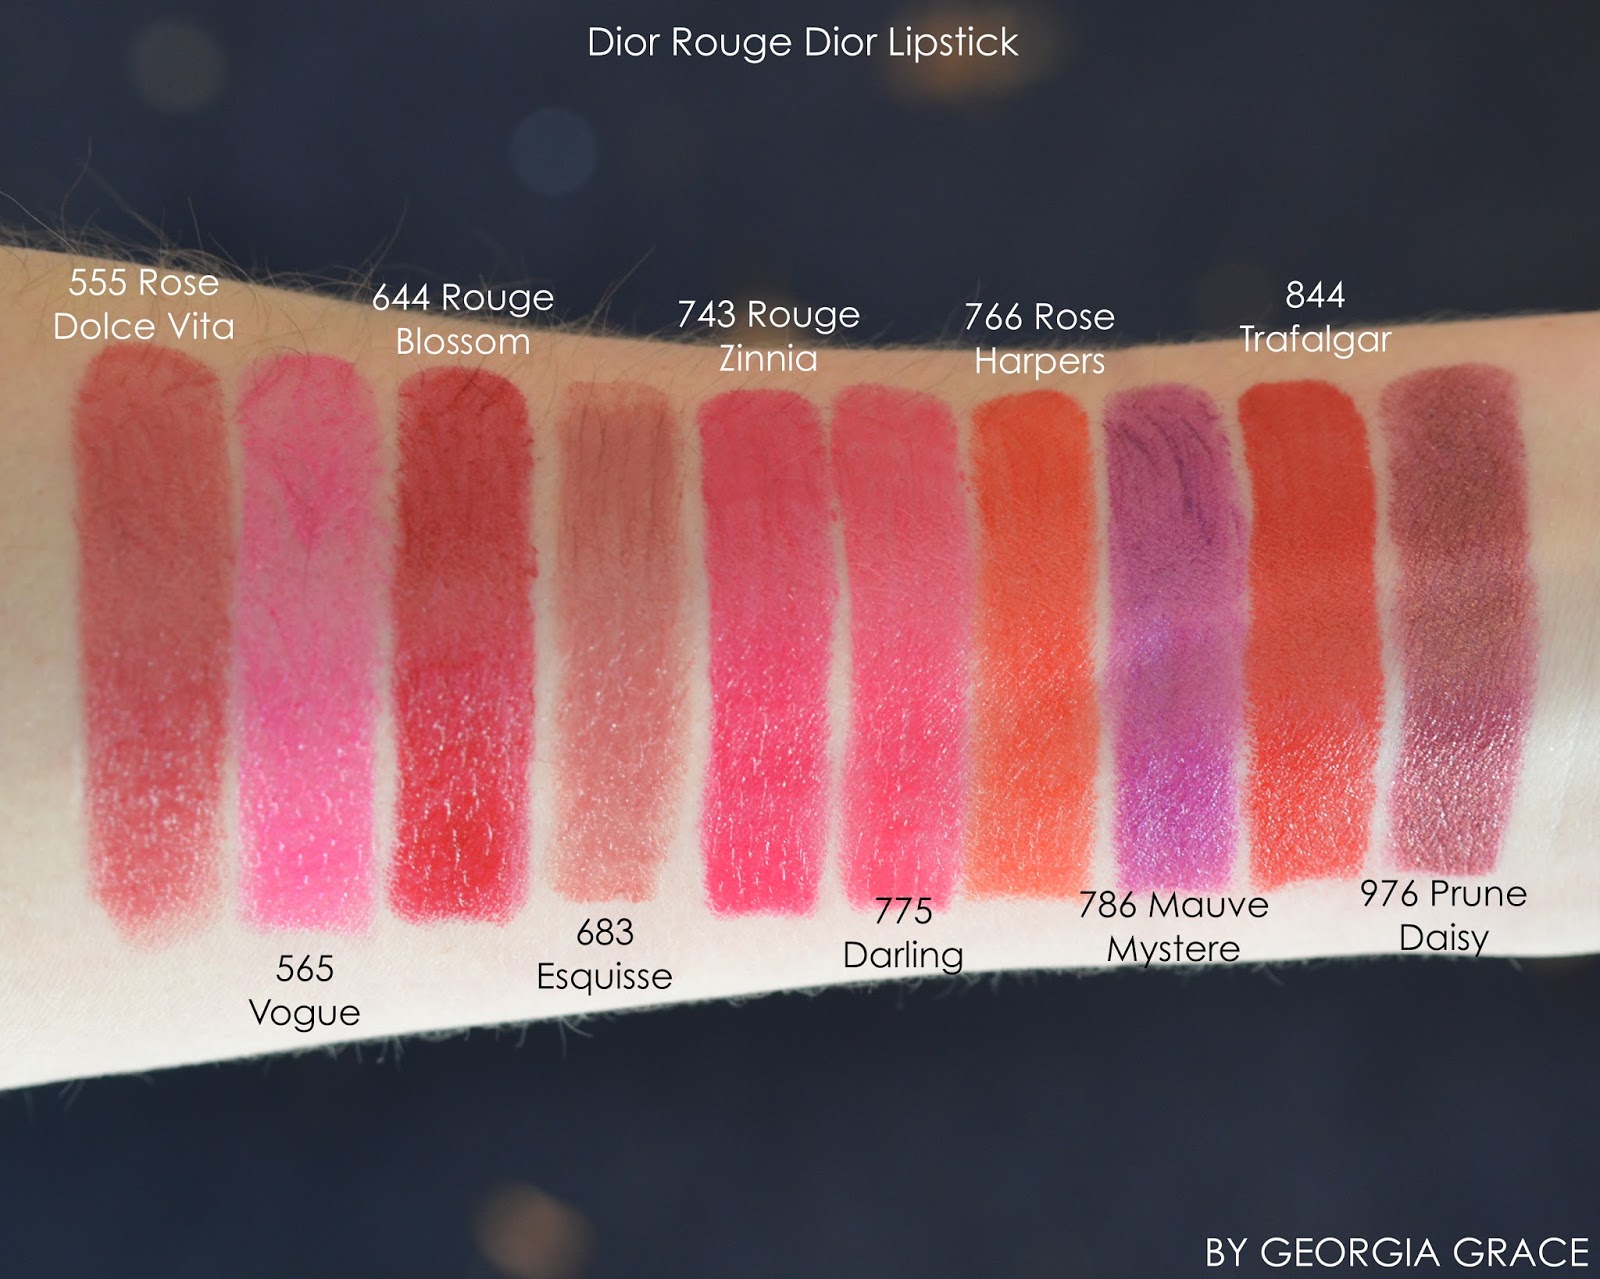 rouge dior lipstick price